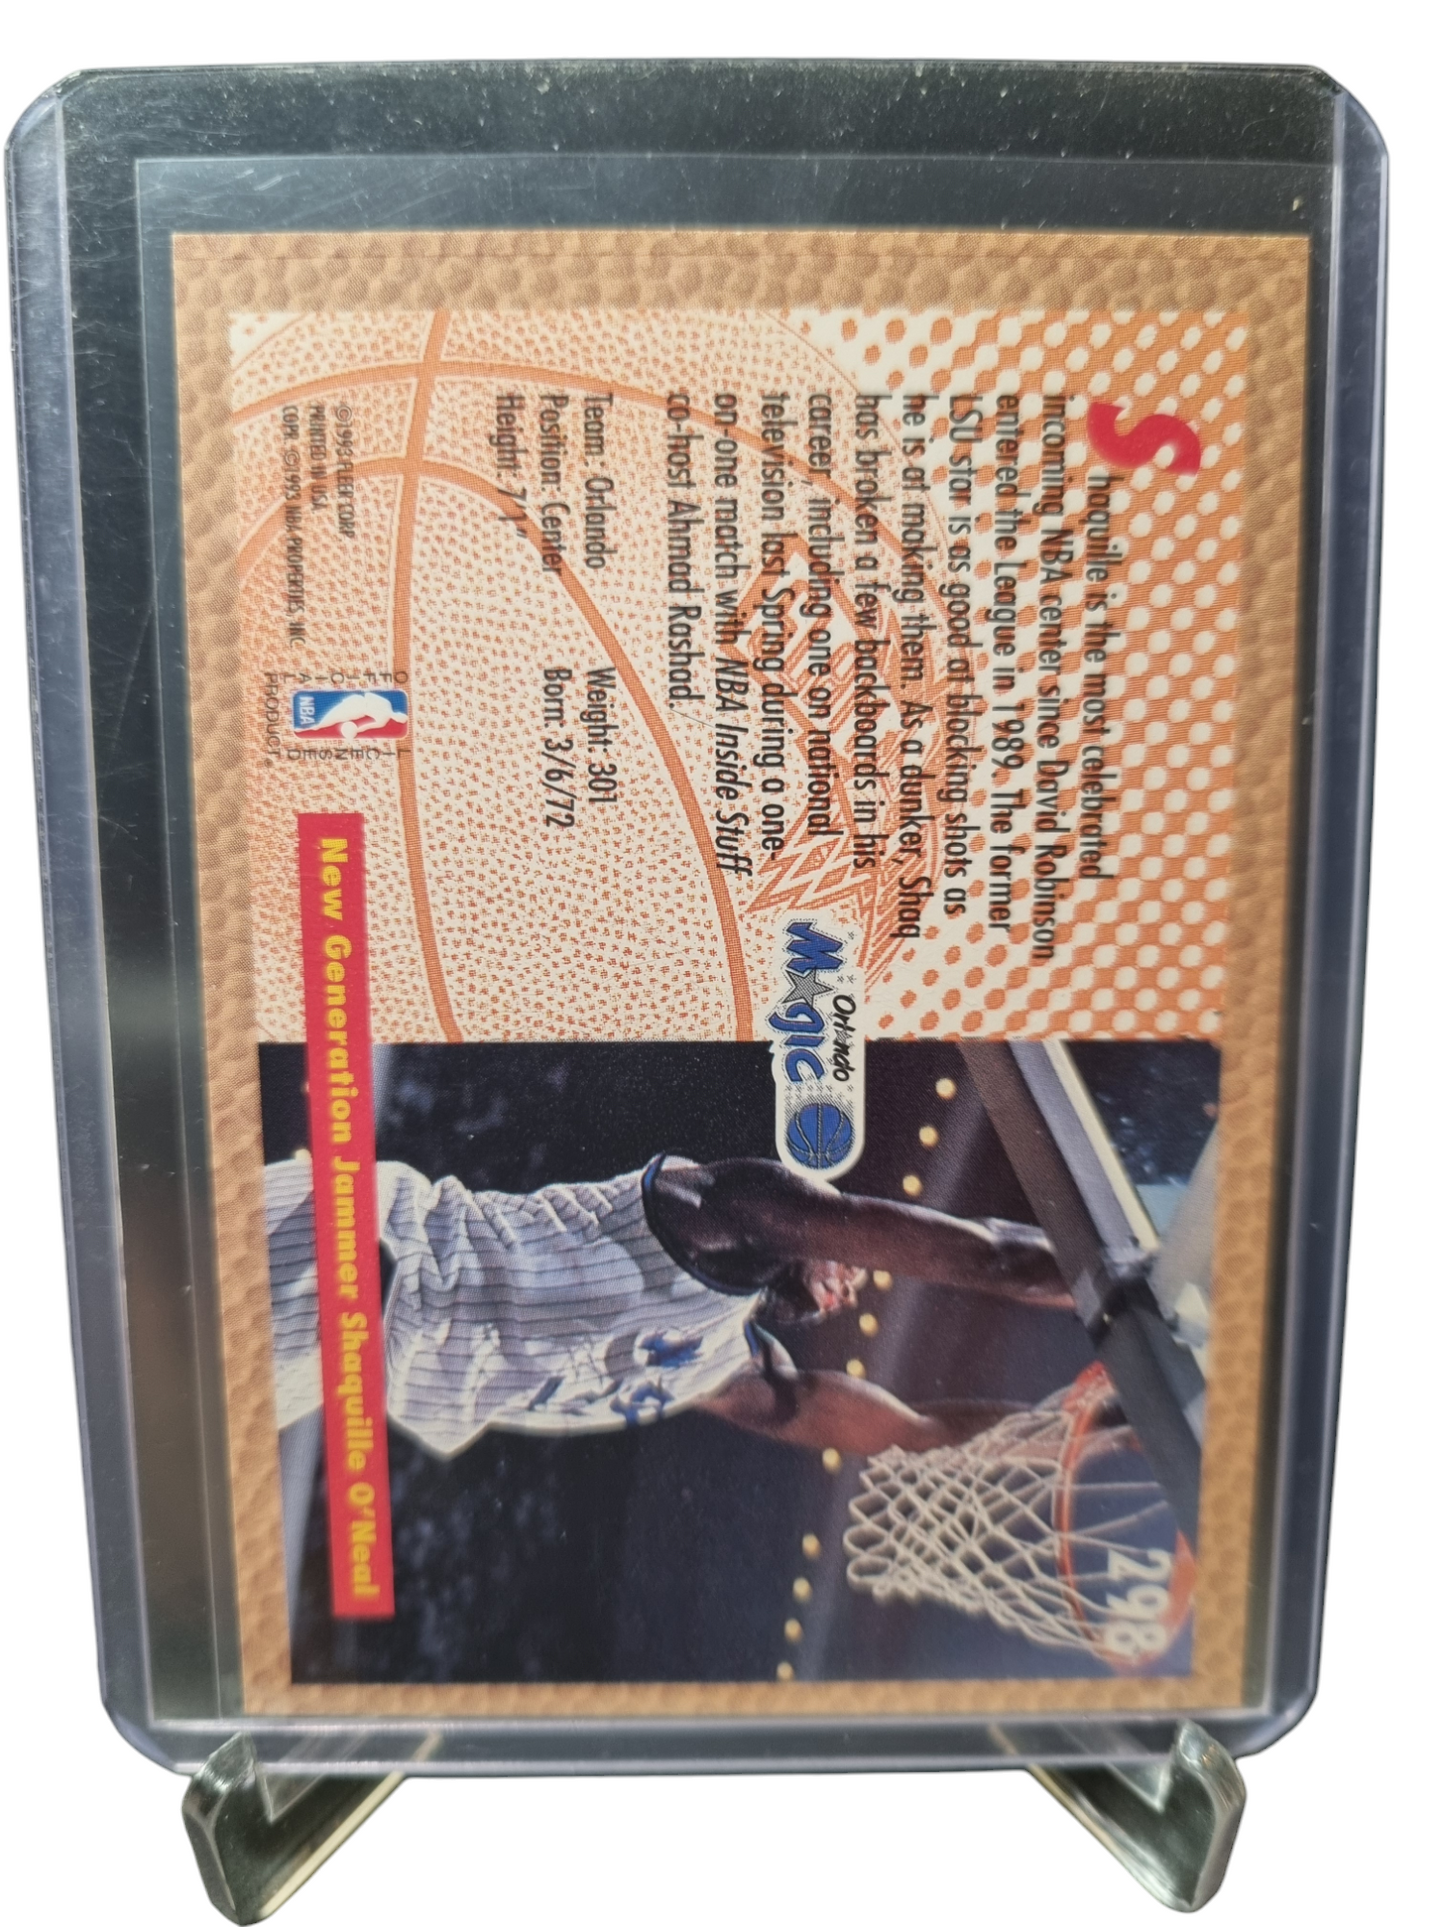 1992-93 Fleer #298 Shaquille O'Neal Rookie Card Slam Dunk